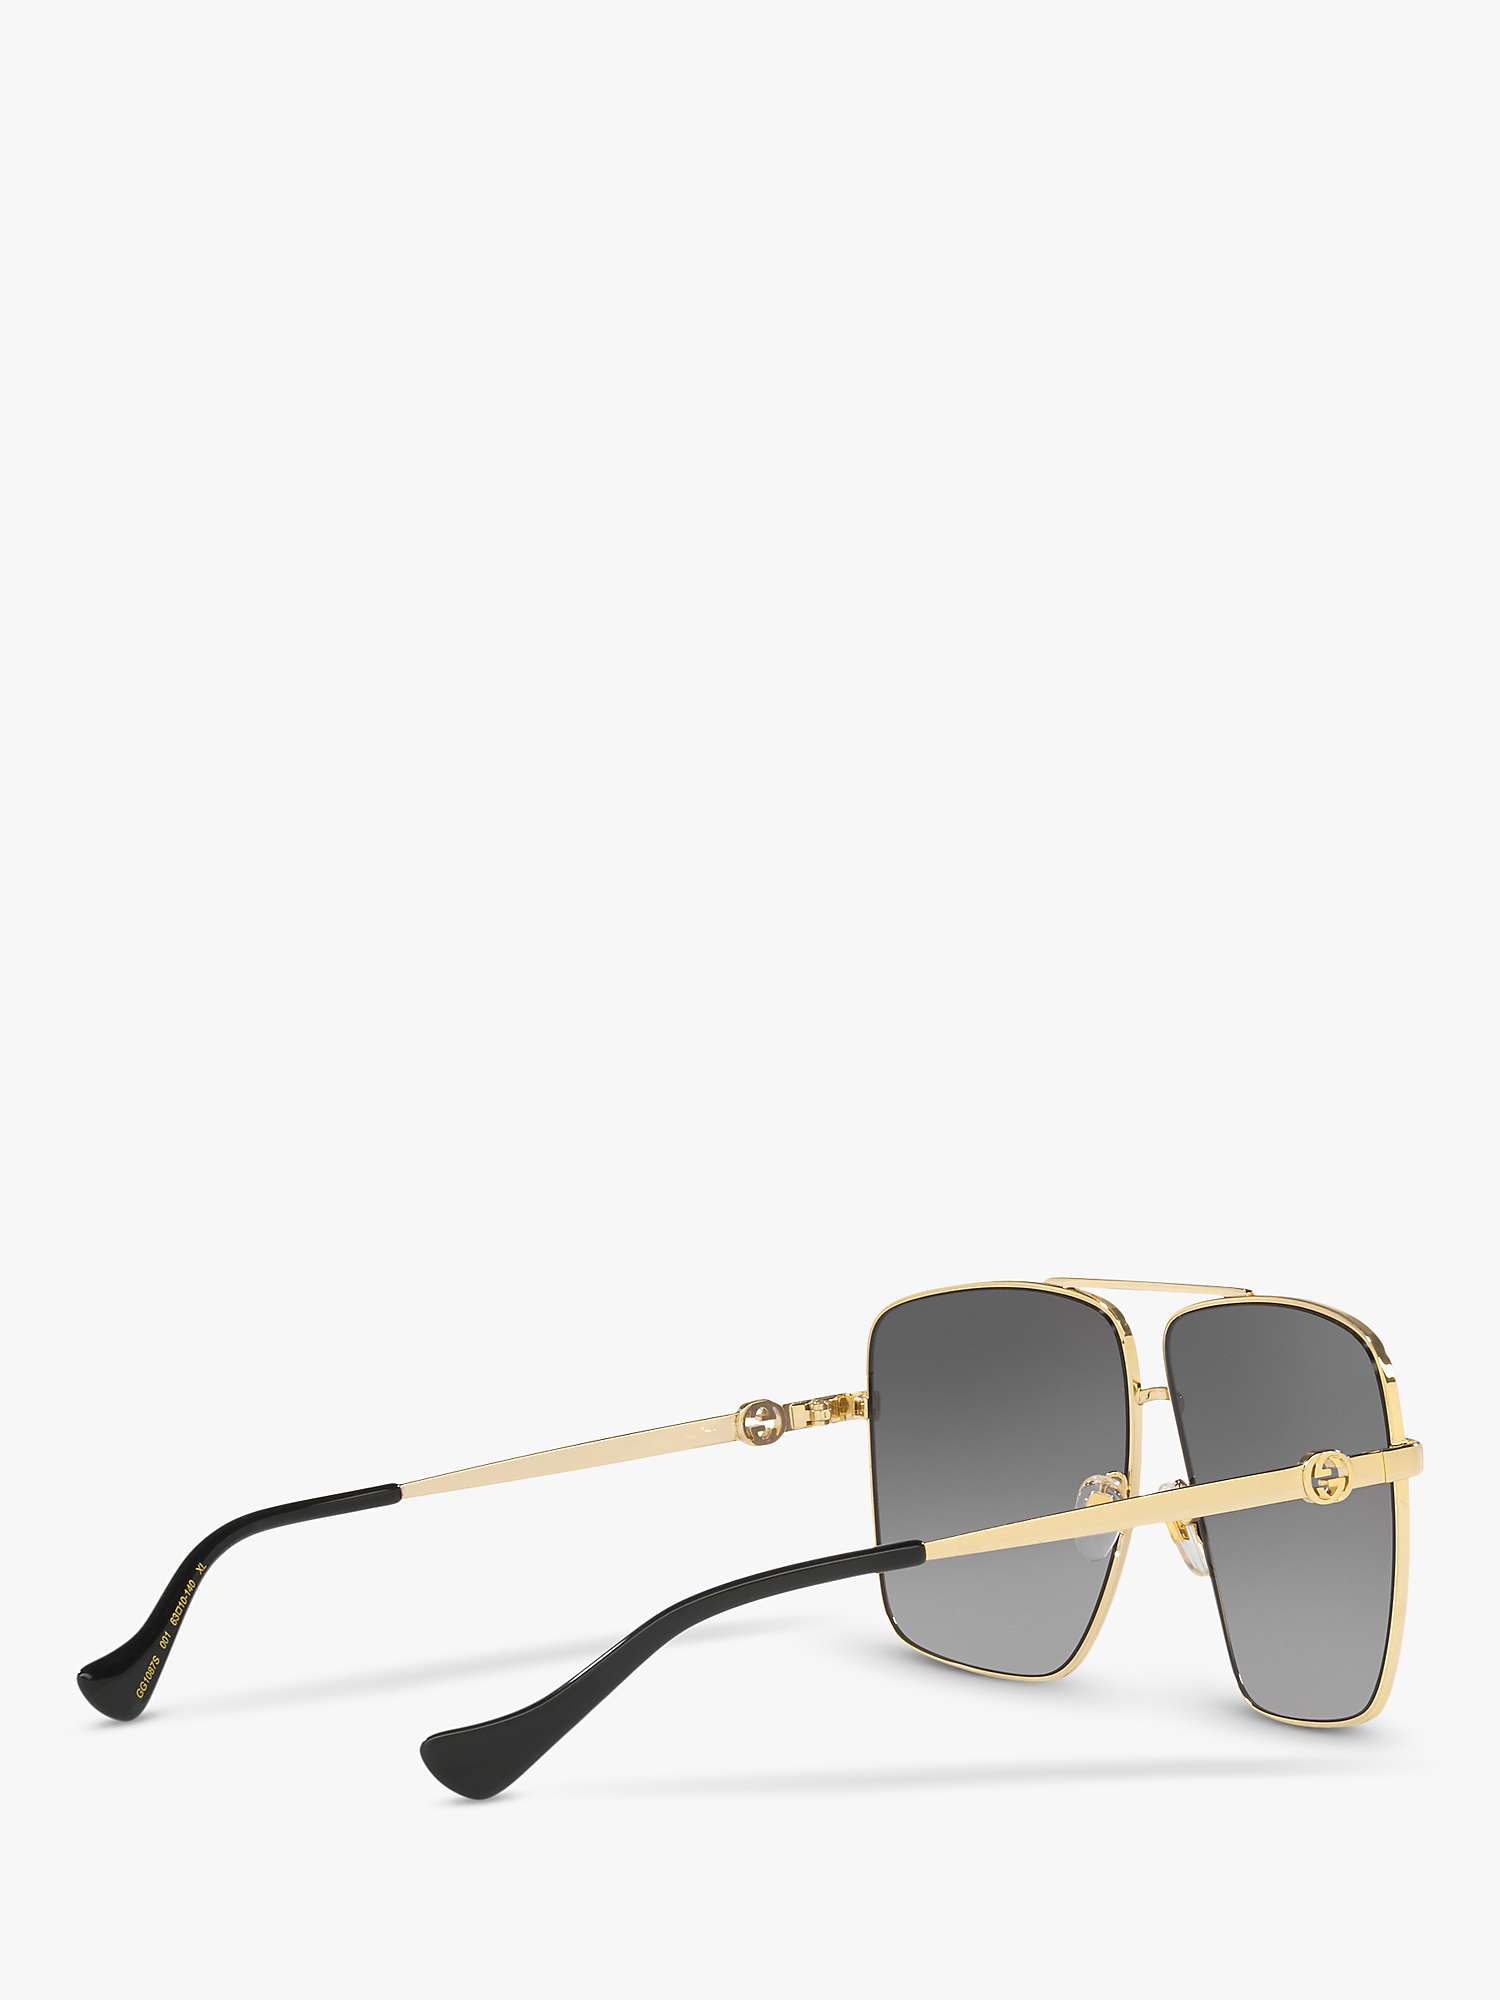 Buy Gucci GG1087S Women's Aviator Sunglasses, Gold/Grey Gradient Online at johnlewis.com